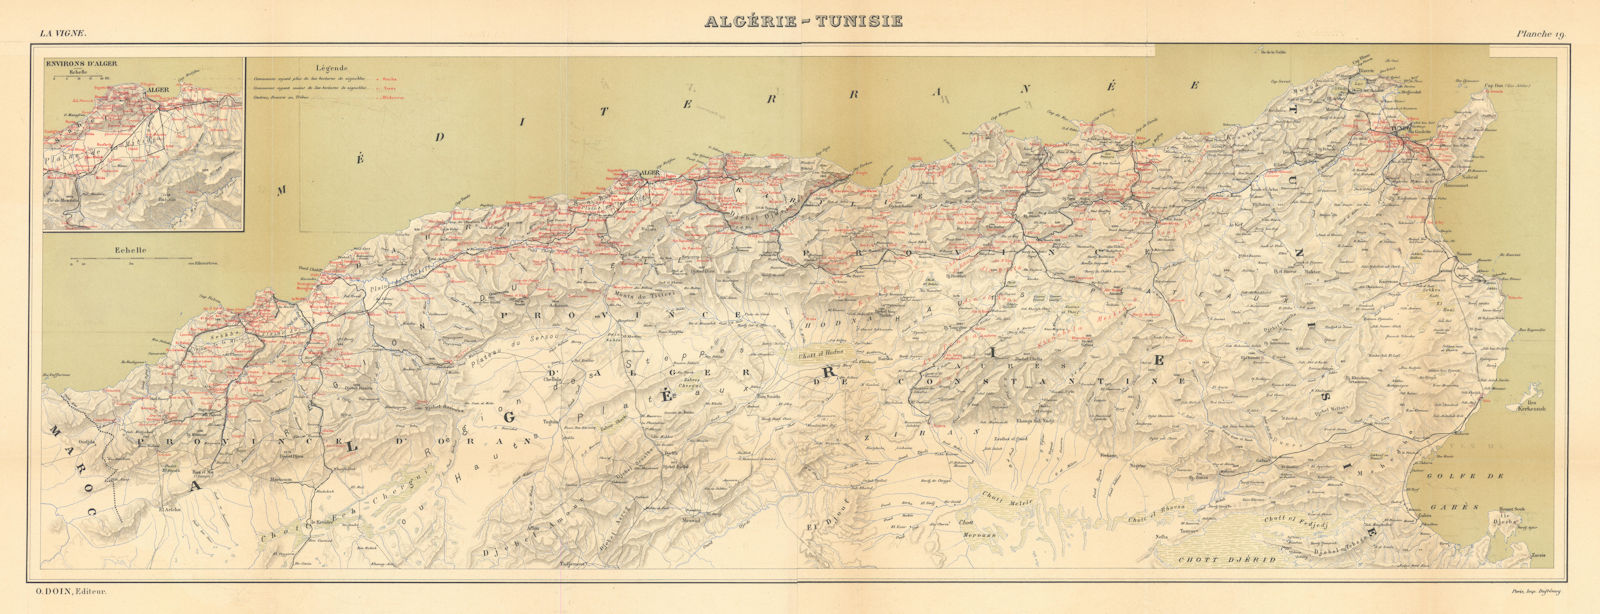 Algérie Tunisie. Algeria & Tunisia. French North Africa wine map HAUSERMANN 1901